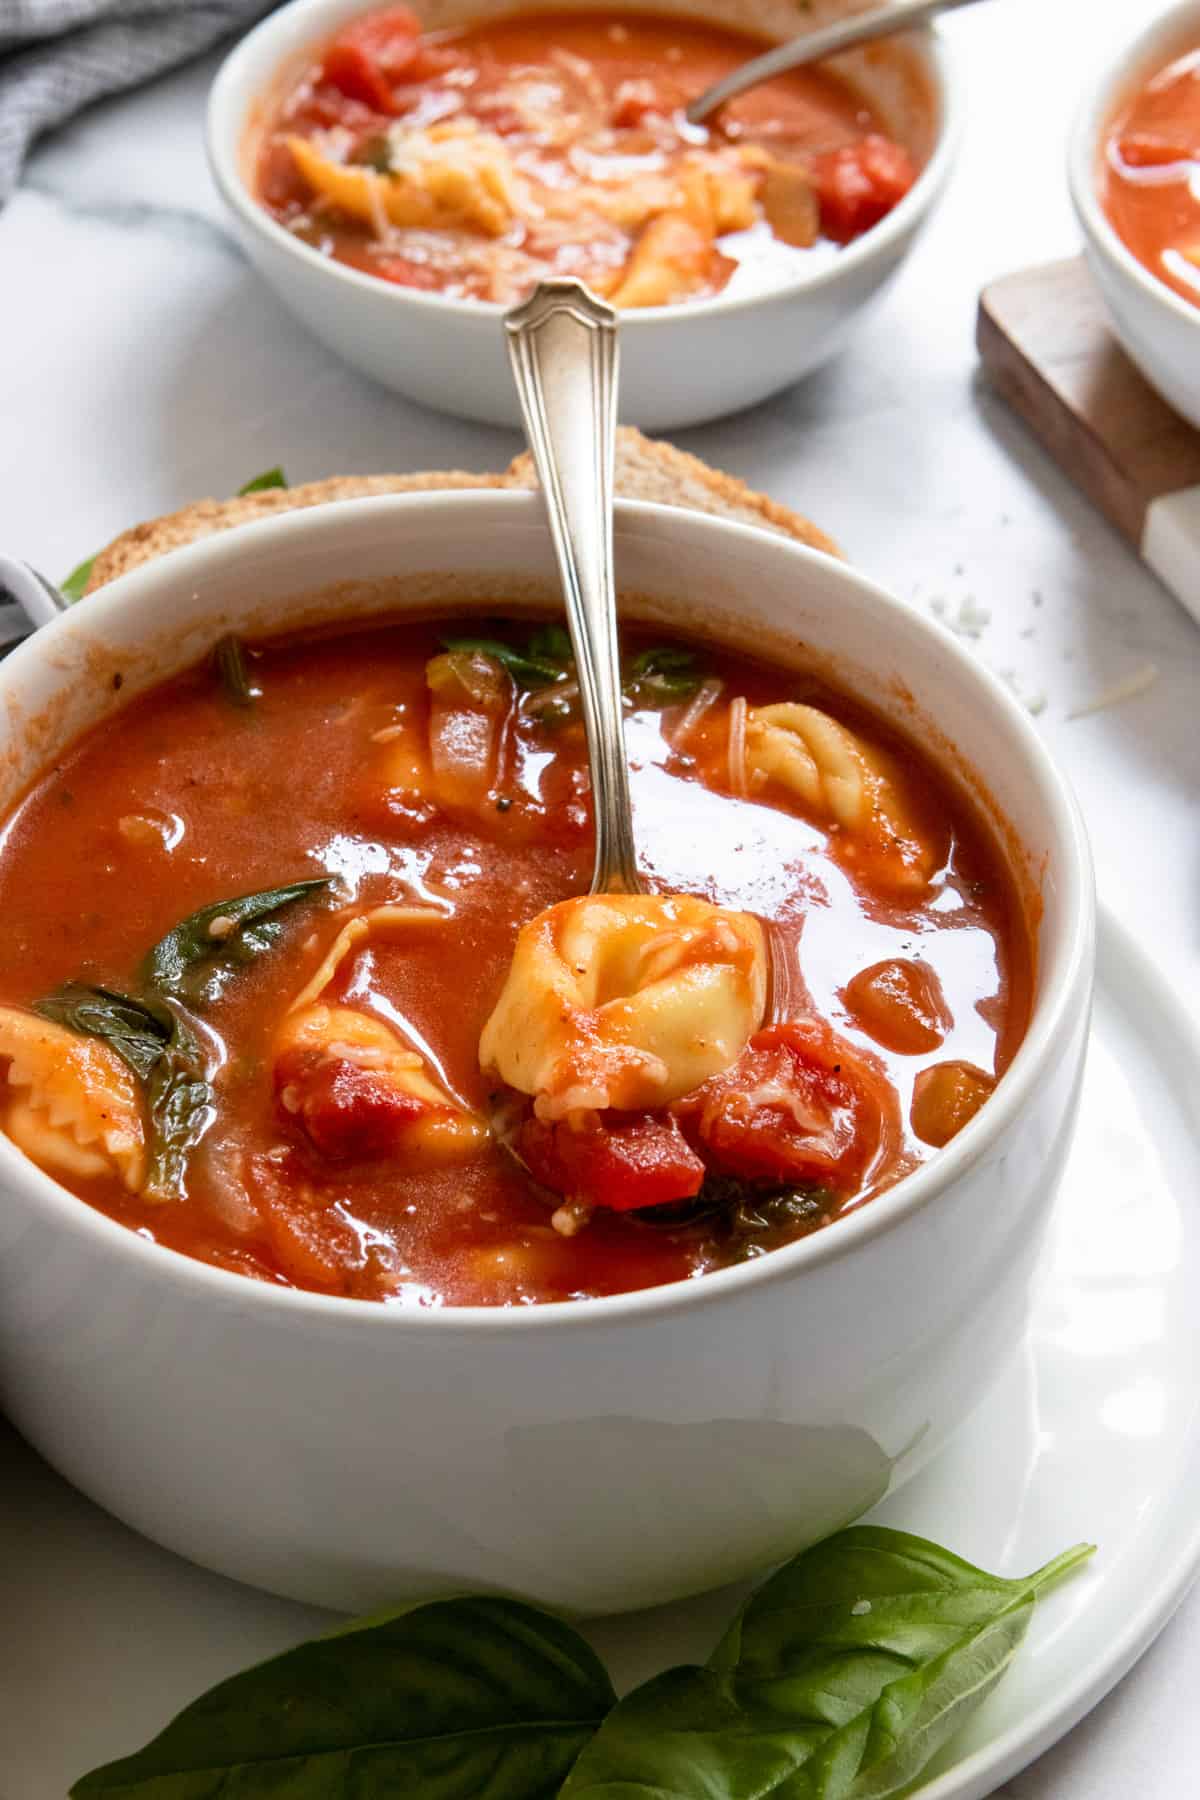 Spoon in soup bowl with tortellini in it.